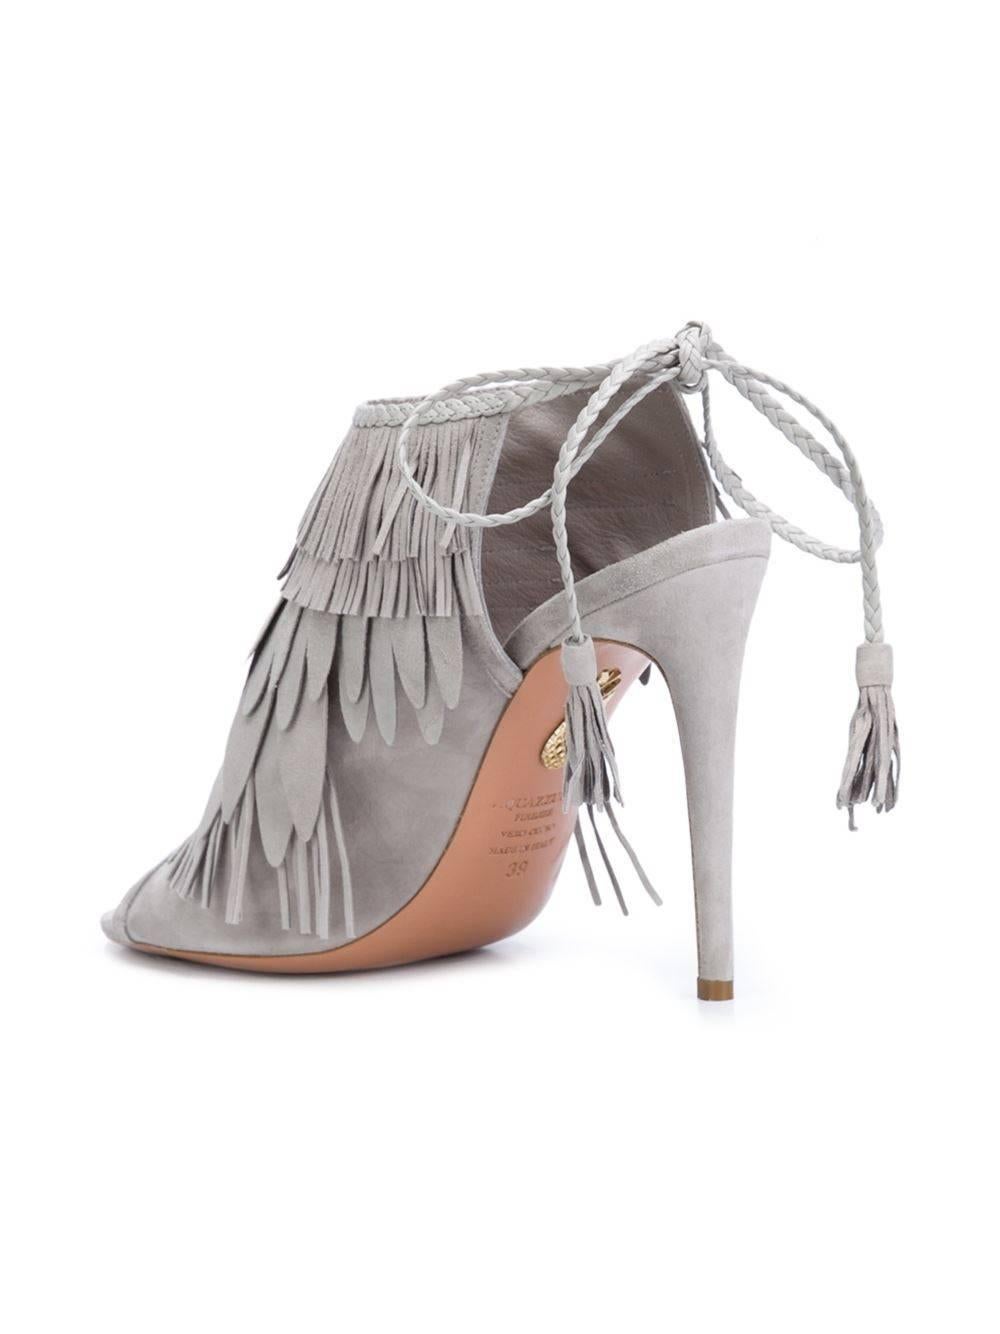 Women's Aquazzura NEW & SOLD OUT Gray Suede Tassel Evening Heels Sandals in Box